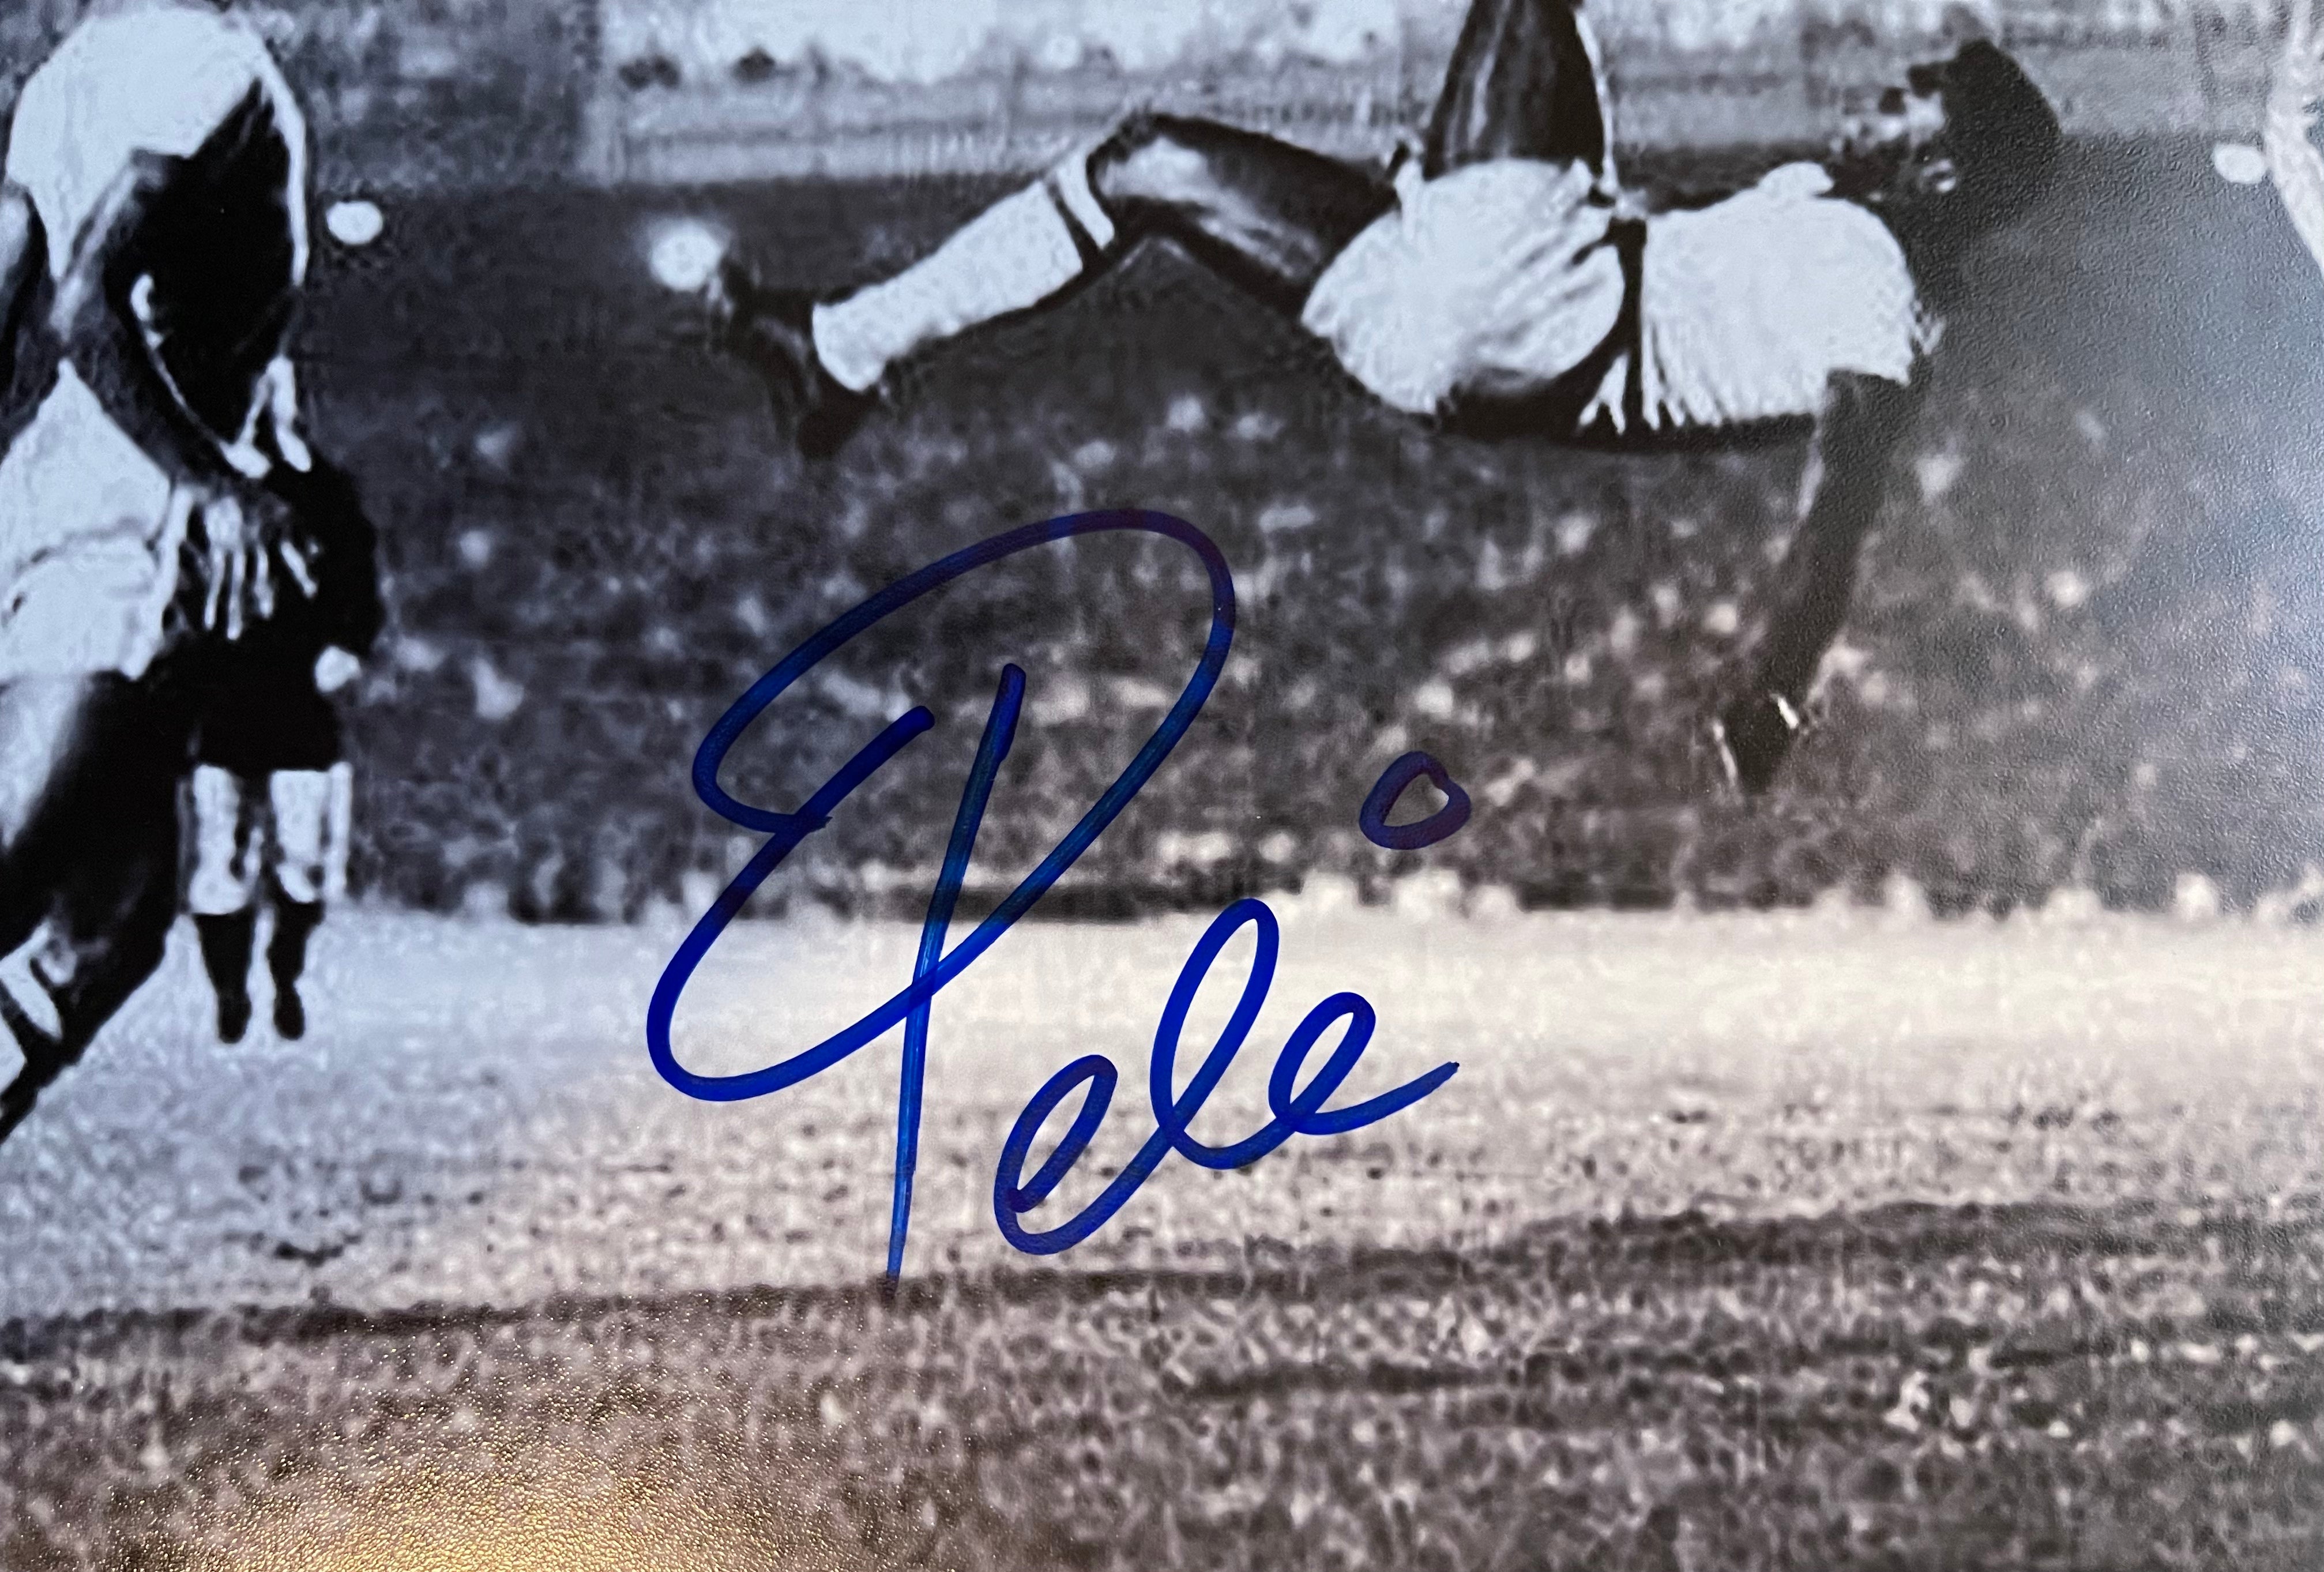 Pele rare Soccer 8x10 autograph photo with COA